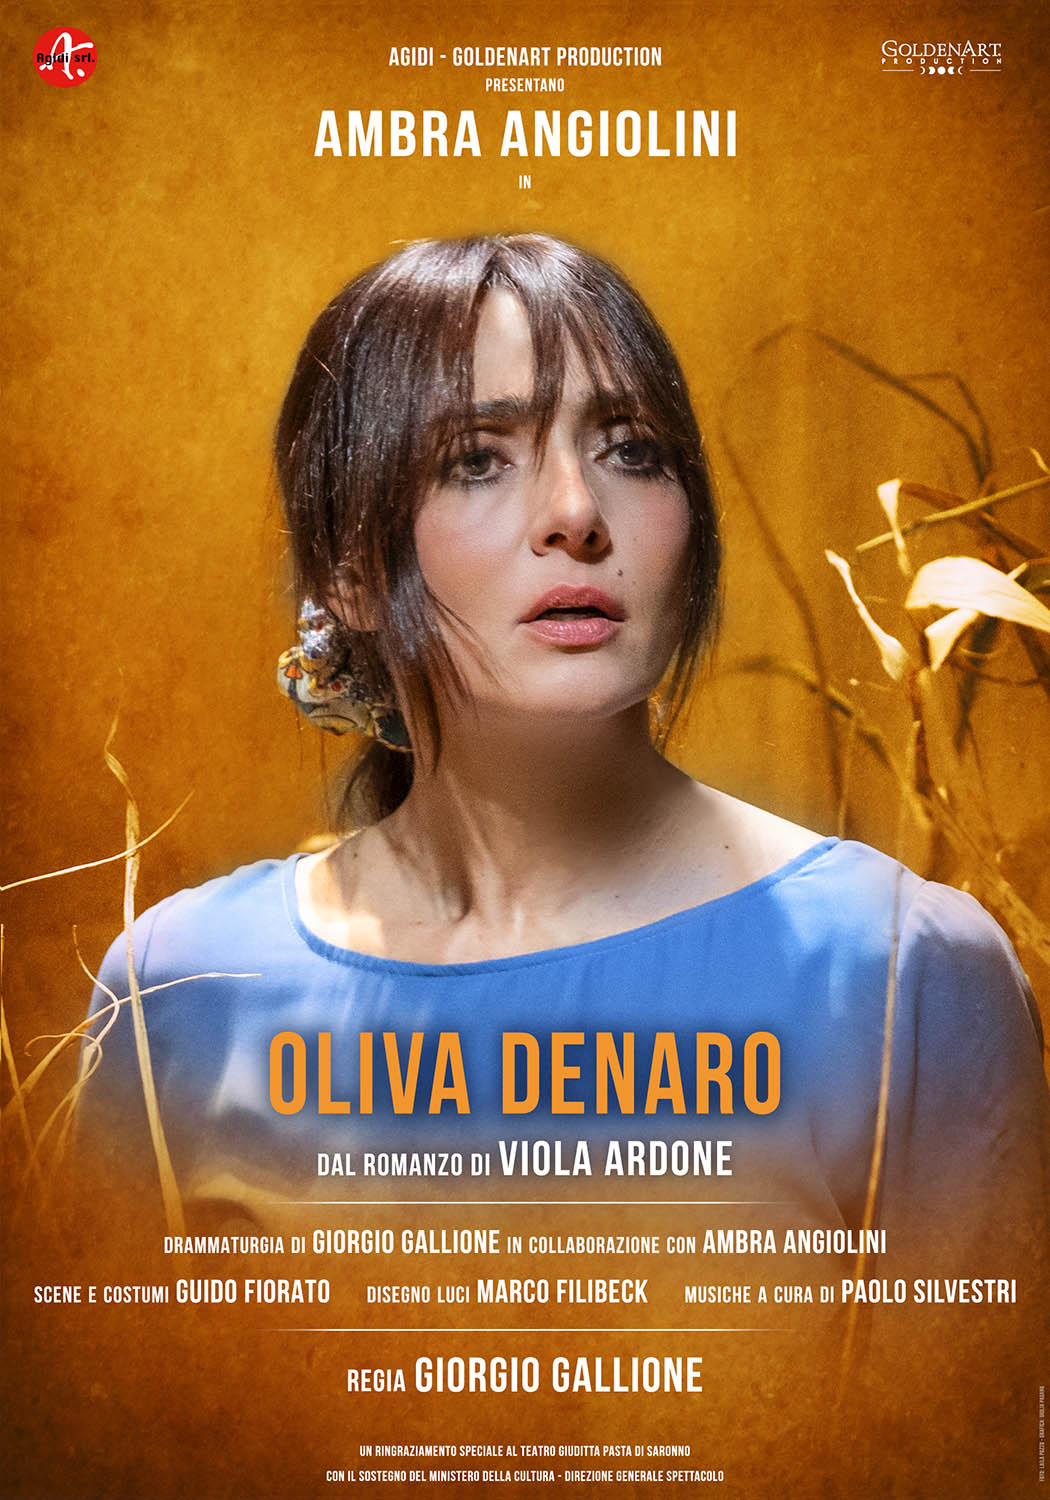 Oliva Denaro - Ambra Angiolini